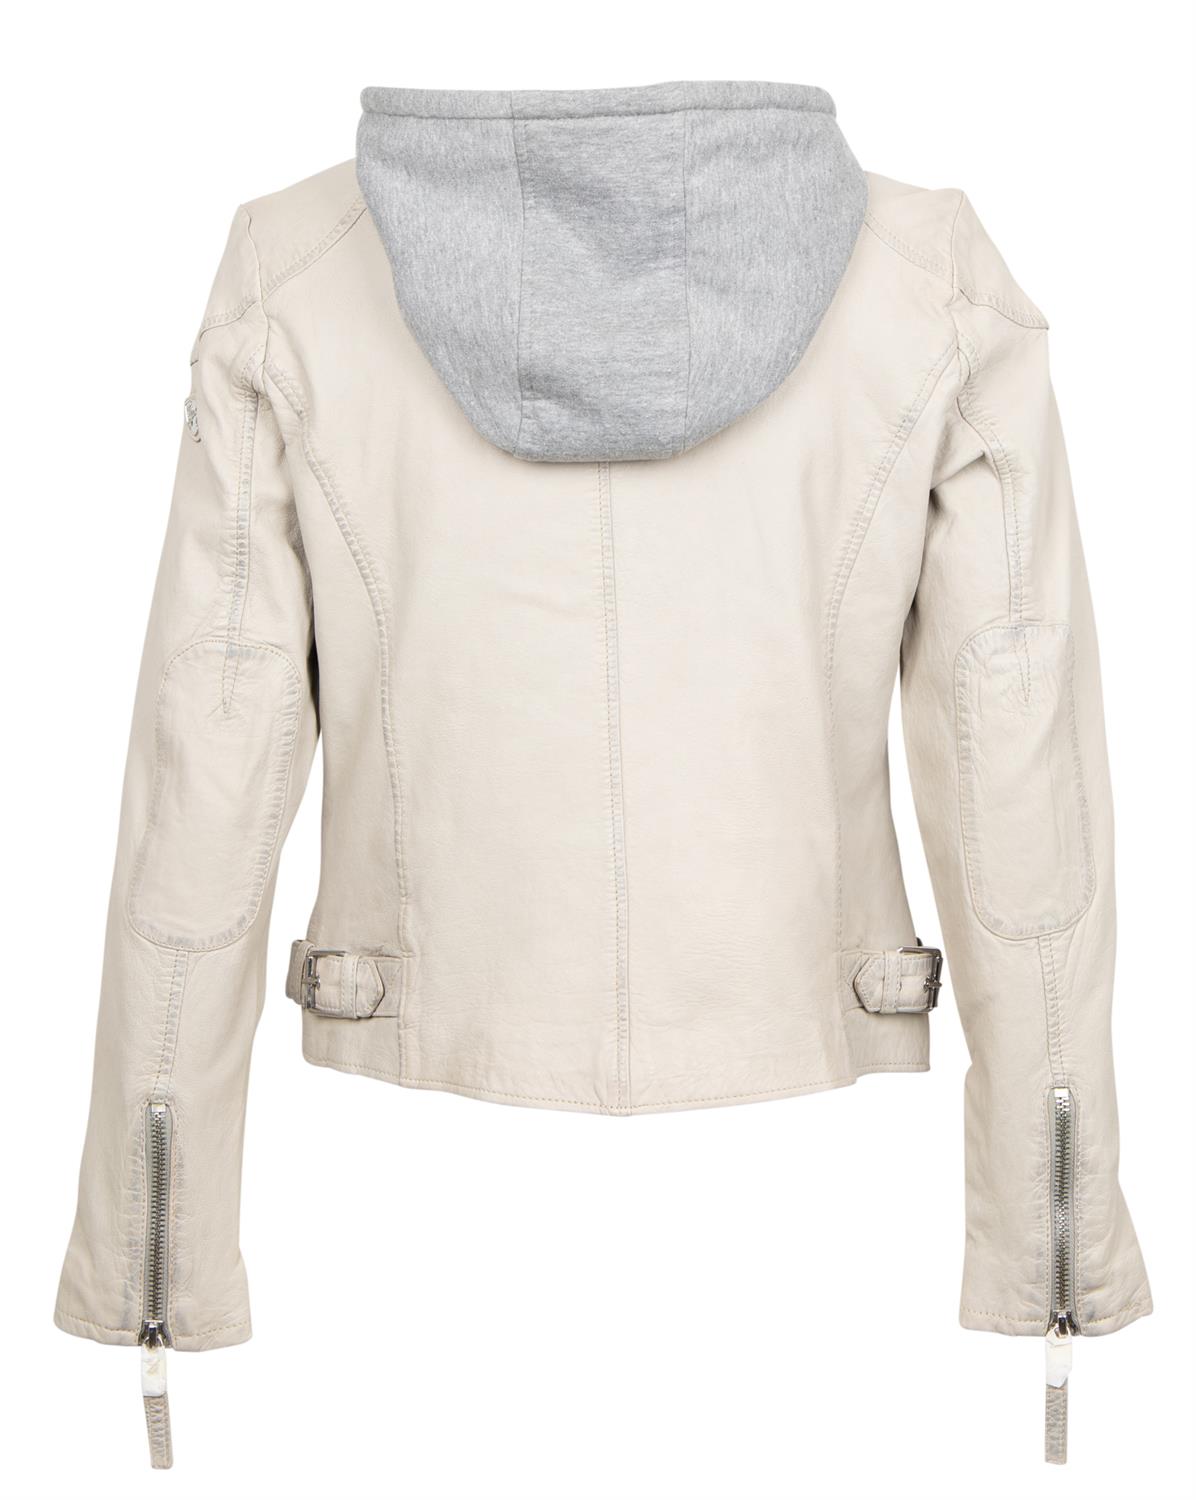 Gipsy Damen Jacke kurz Lederjacke mit abnehmbarer Kapuze beige bequem  online kaufen bei